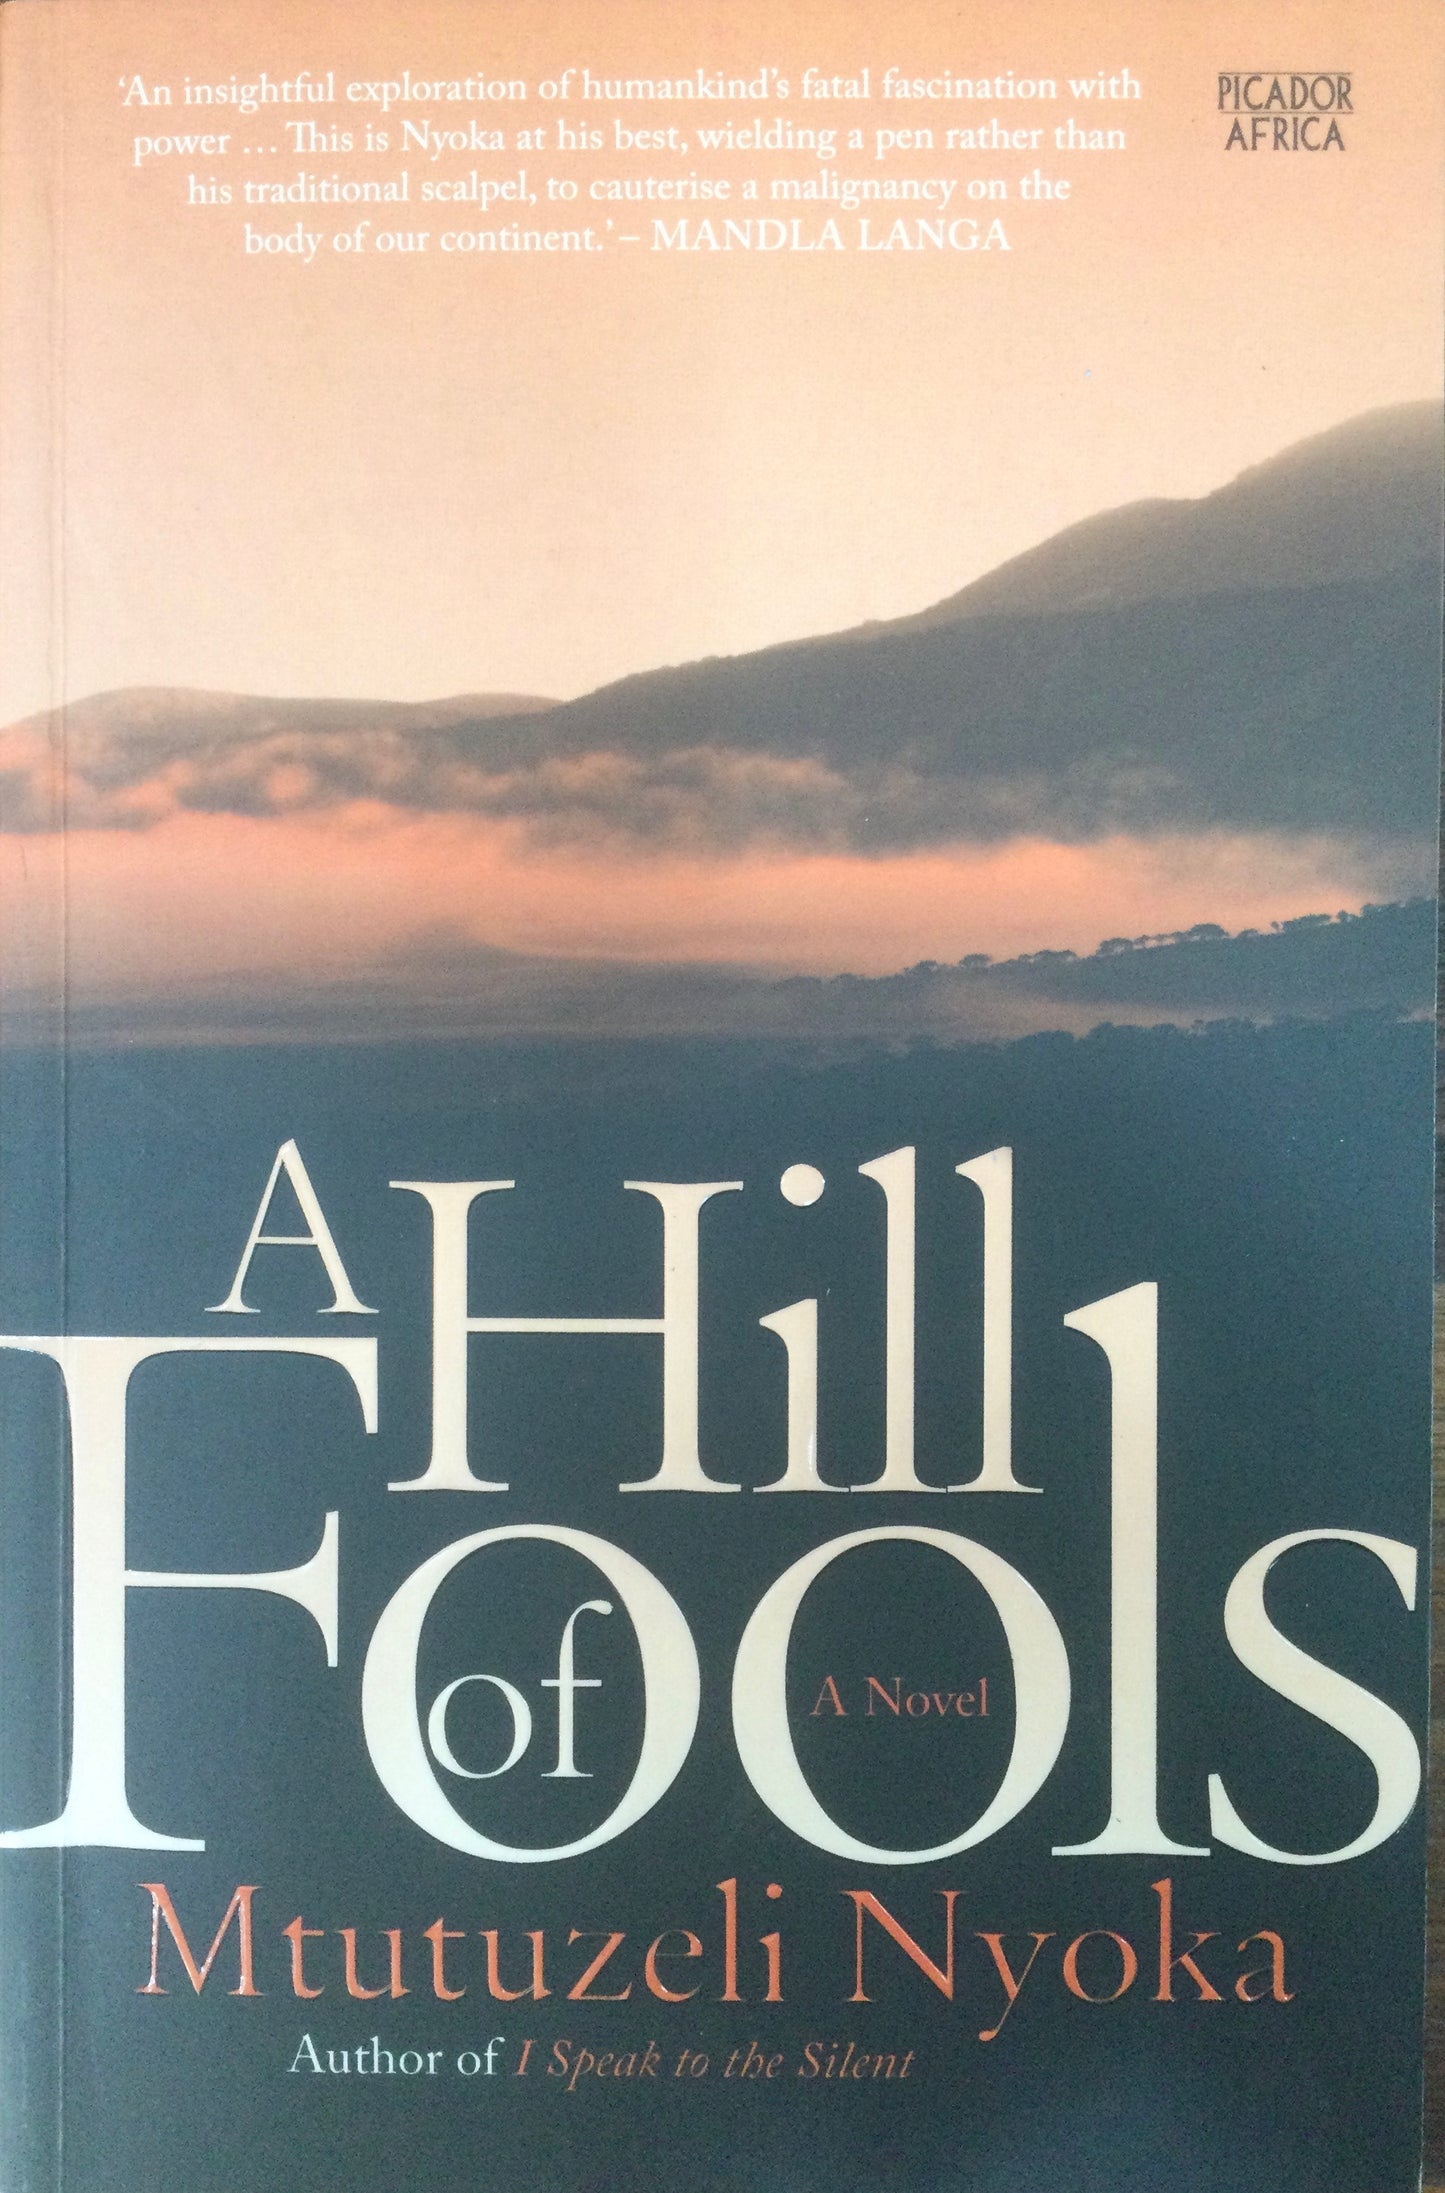 A Hill Of Fools, by Mtutuzeli Nyoka (Used)